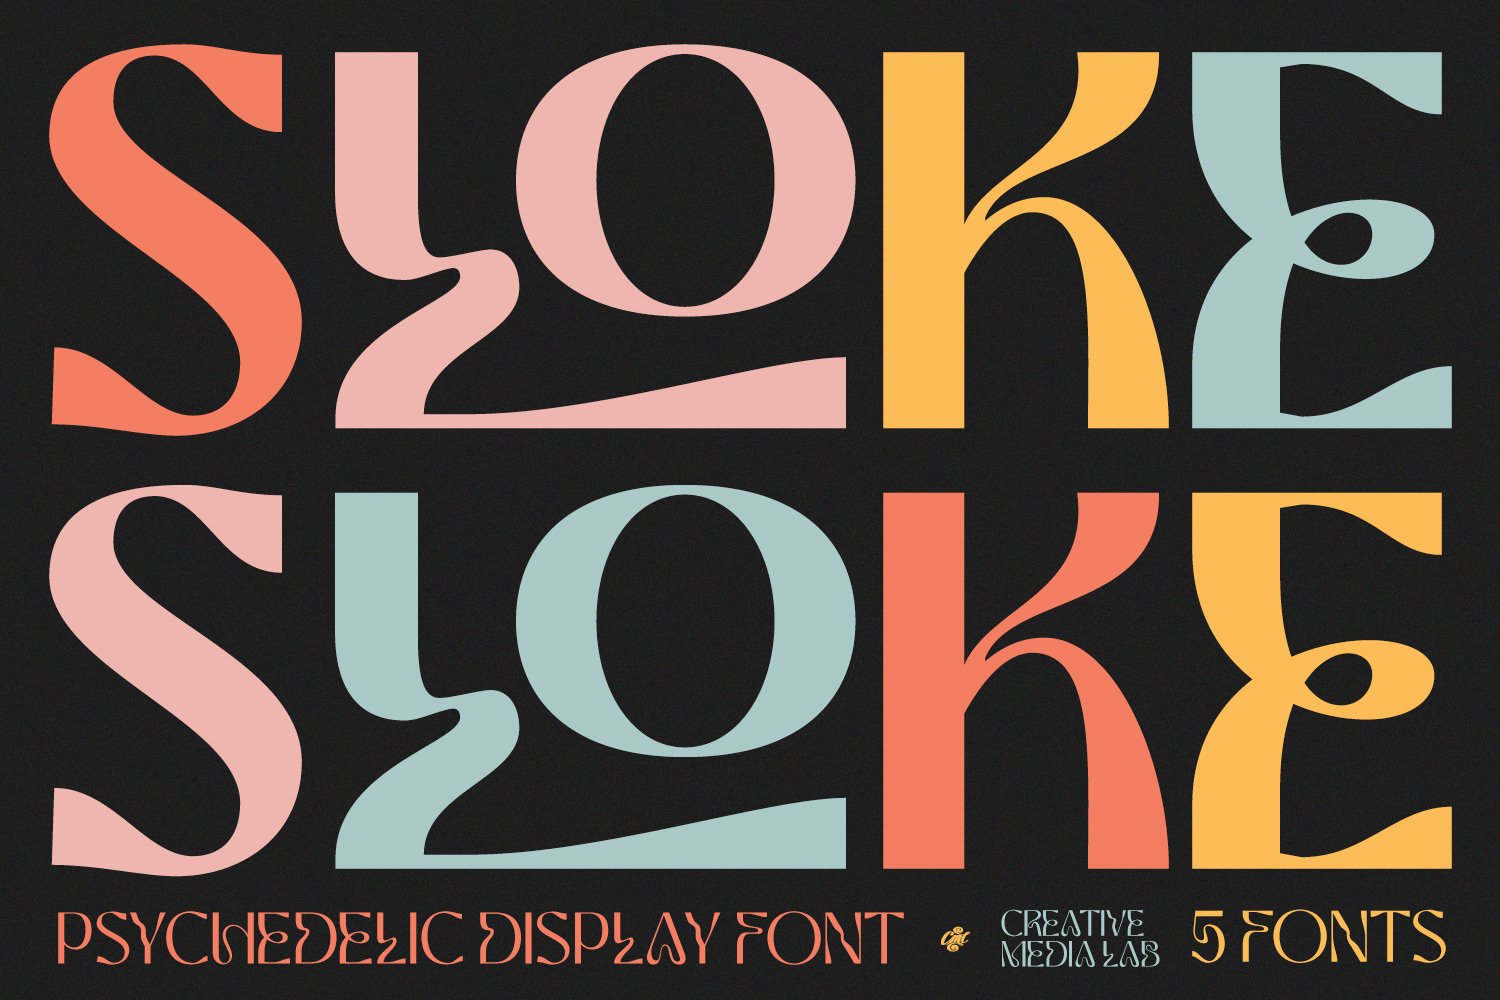 Sloke - Psychedelic Display font cover image.